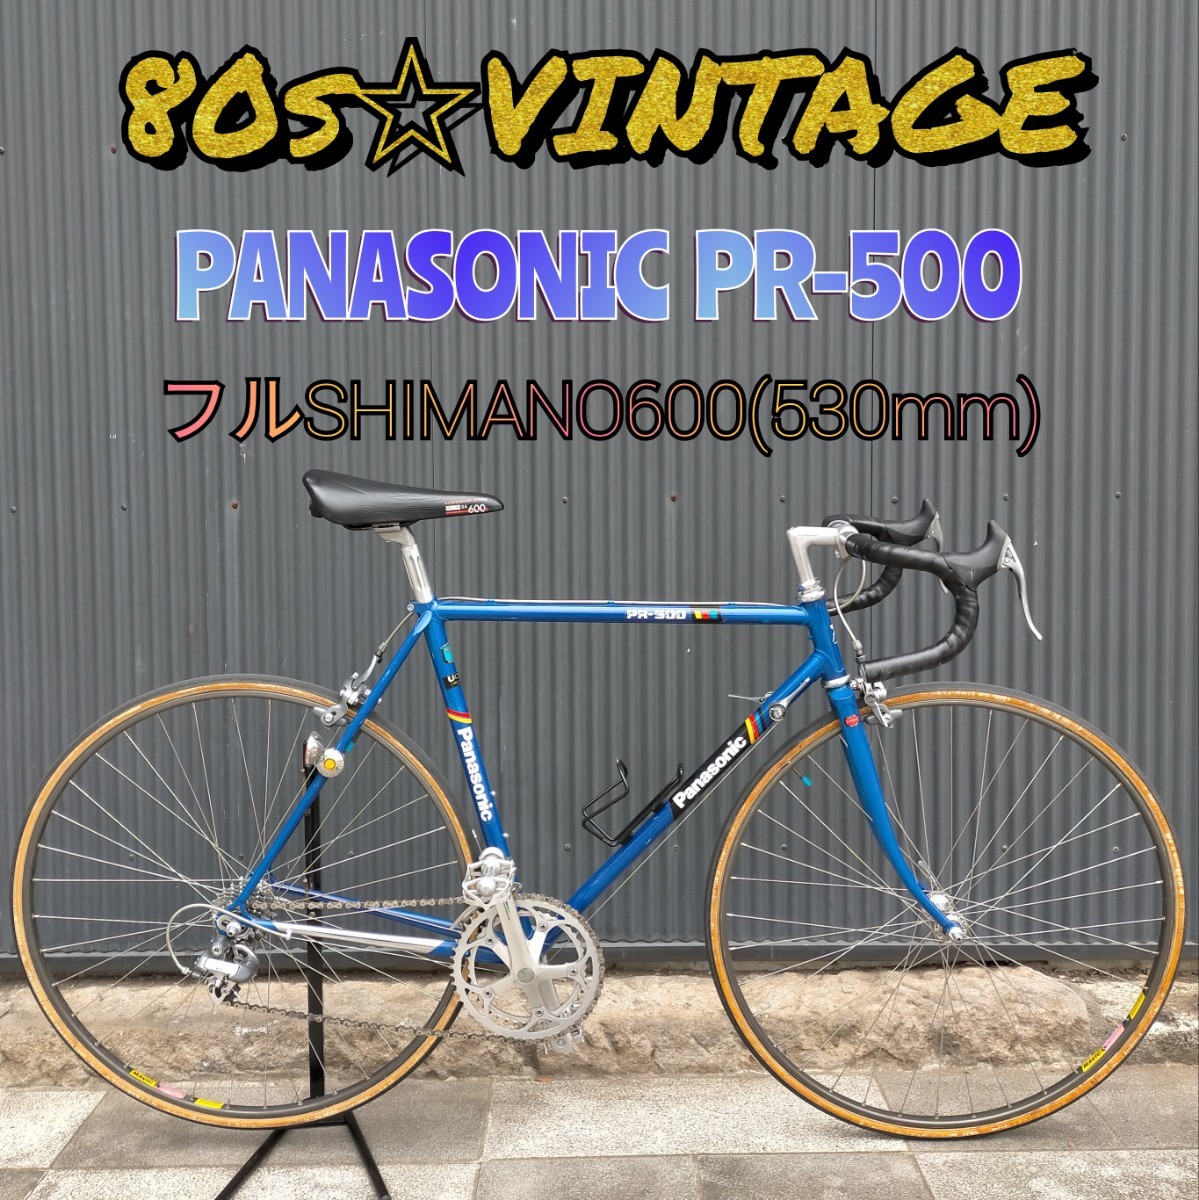 [80s* condition *] Panasonic *PR-500 full SHIMANO600 ( size CT530mm) PANASONIC road bike Shimano 600